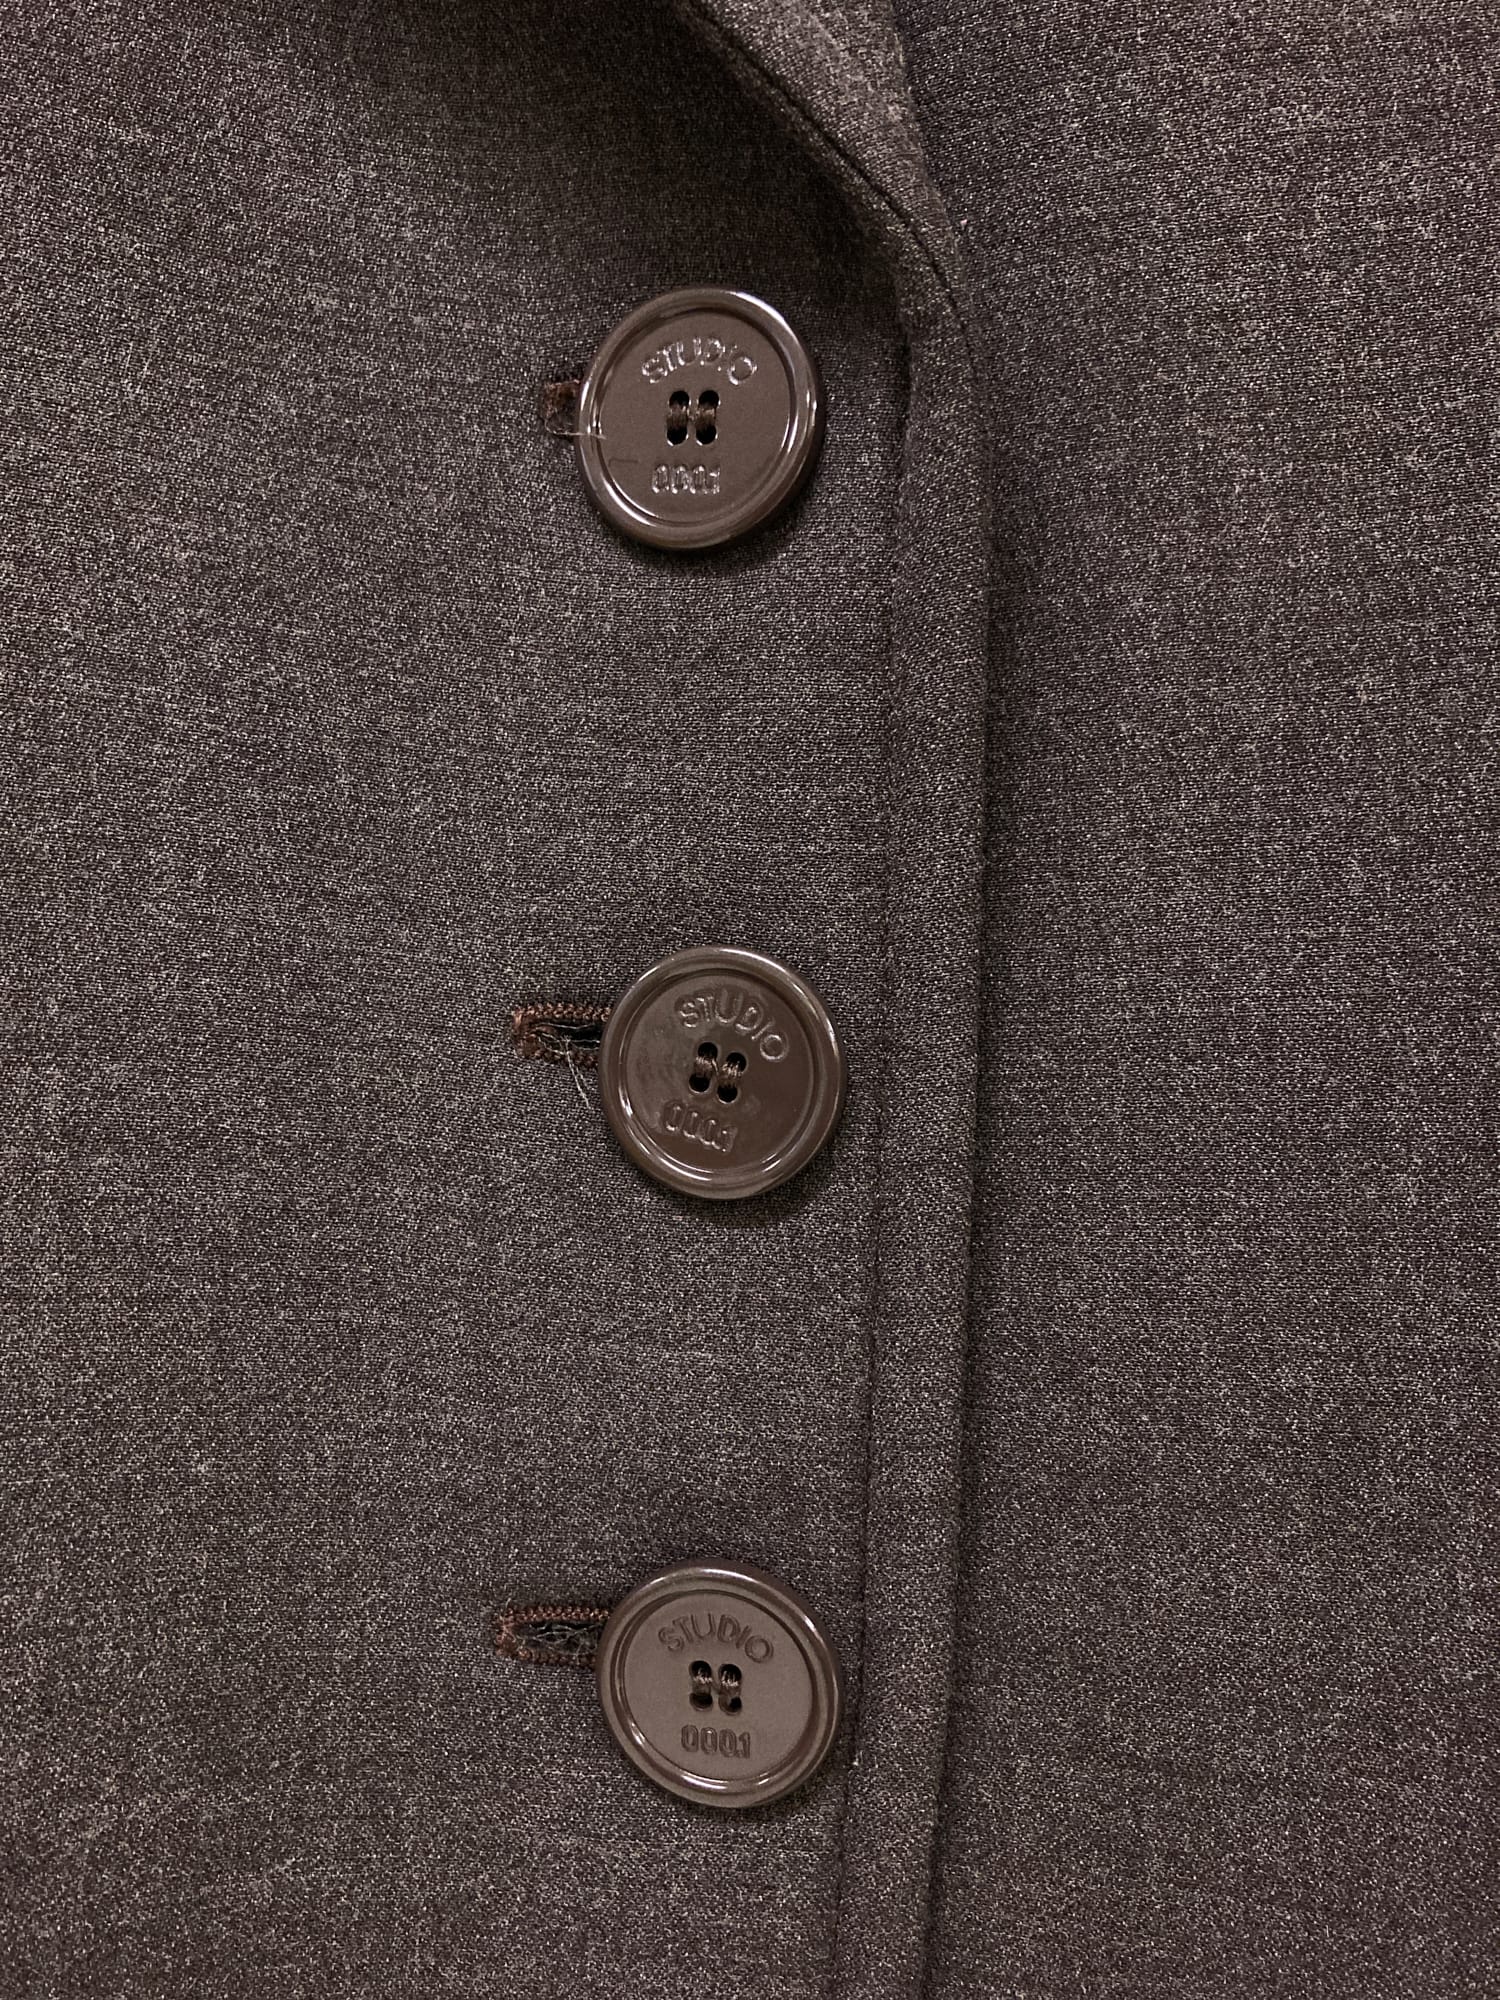 Studio 0001 Gianfranco Ferre 1980s brown wool three button coat - size 8